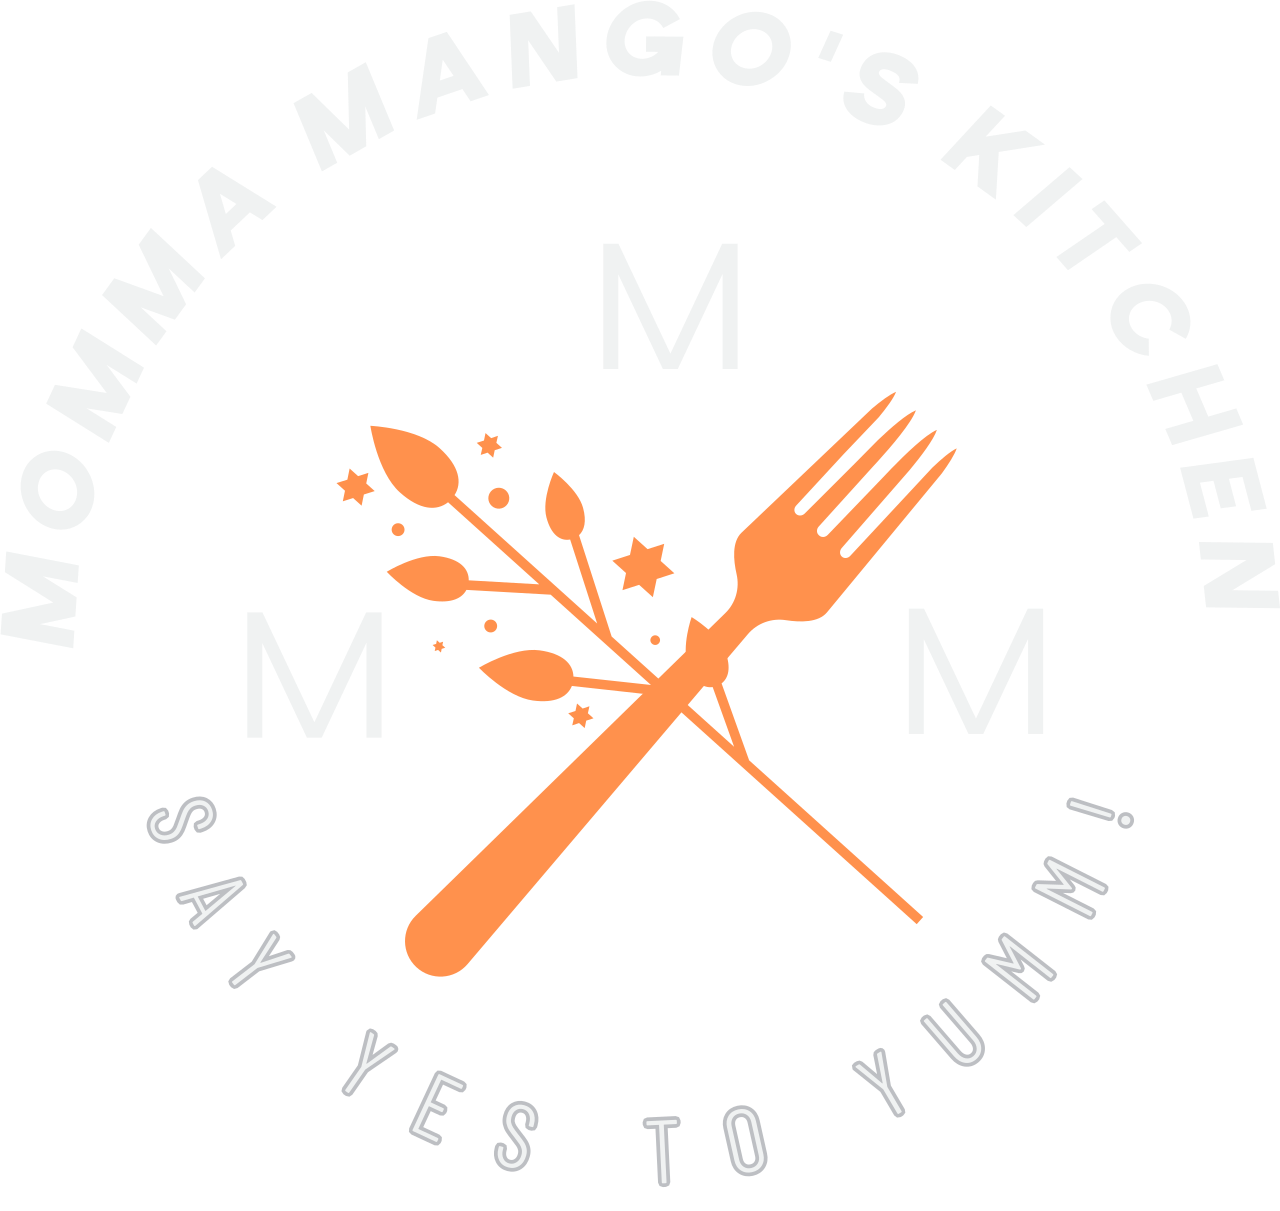 MOMMA MANGO'S KITCHEN 's web page